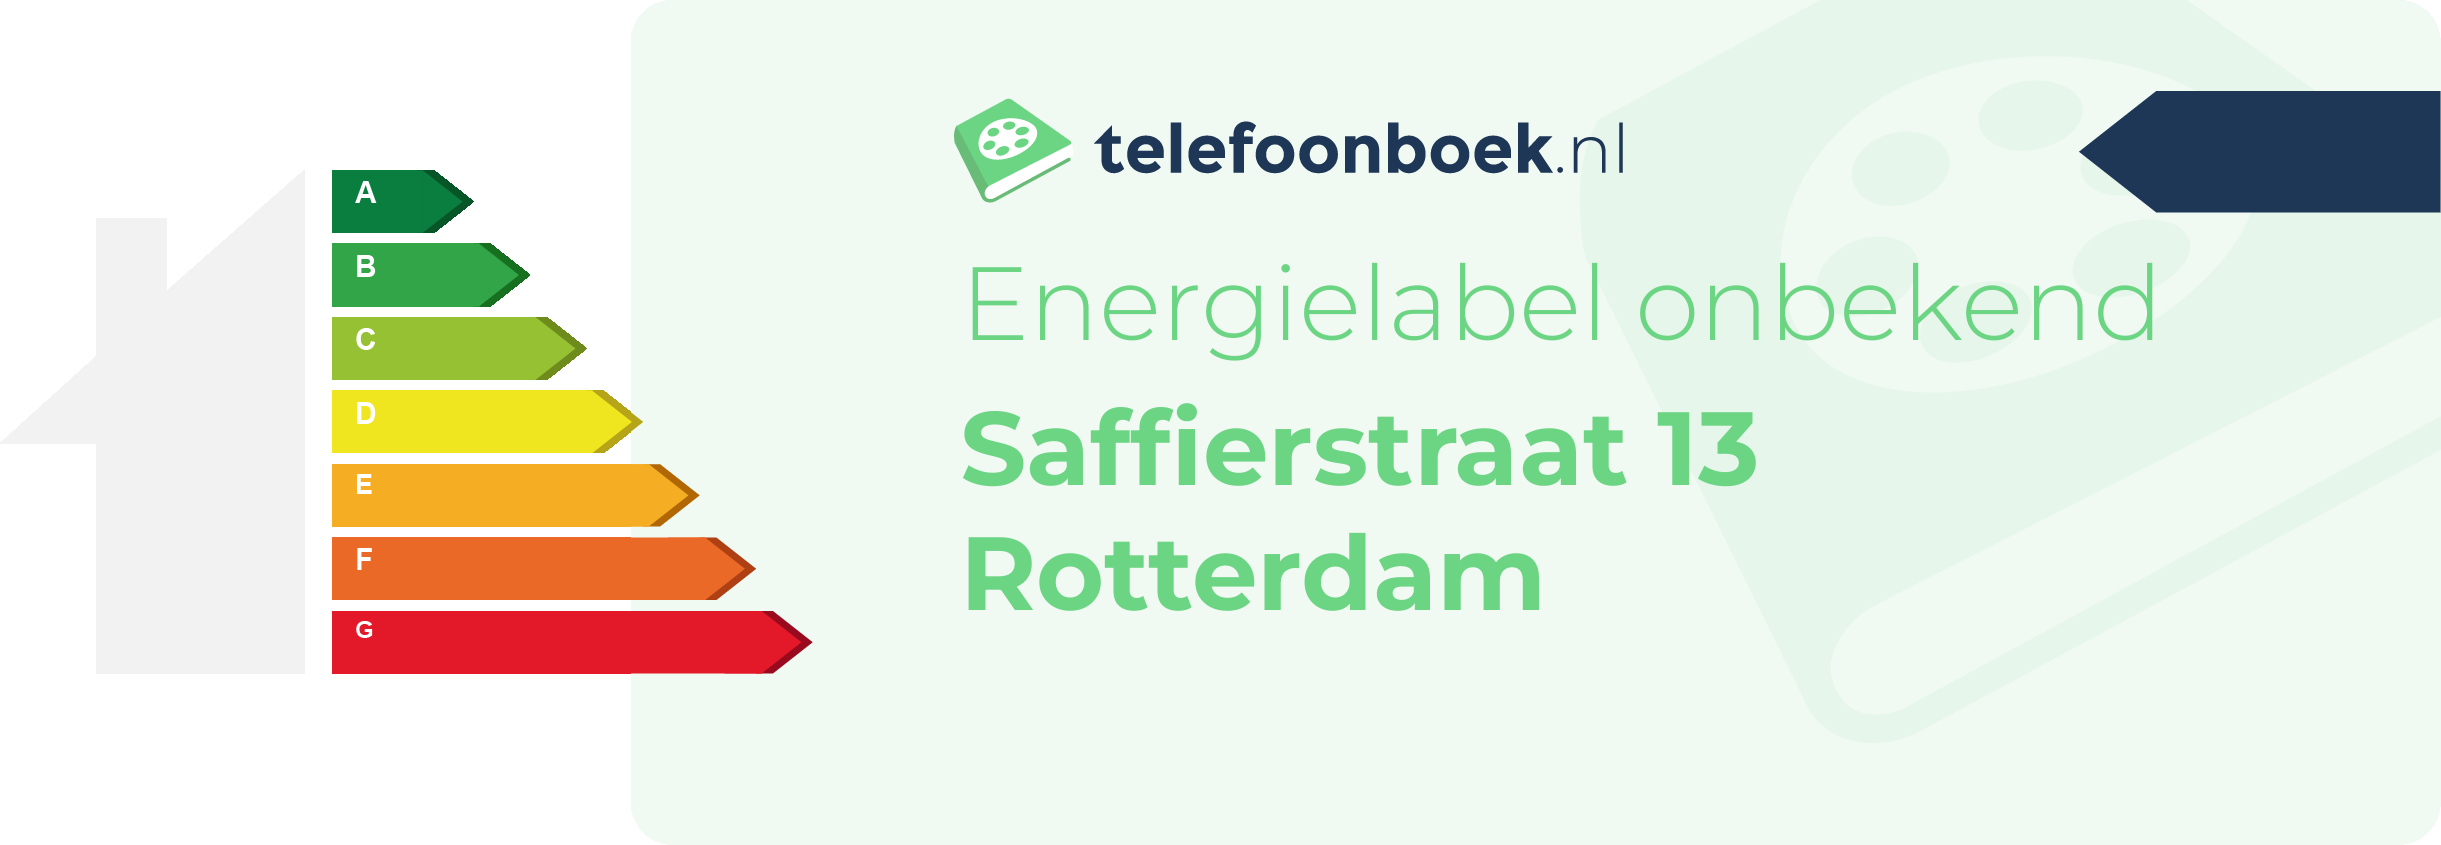 Energielabel Saffierstraat 13 Rotterdam